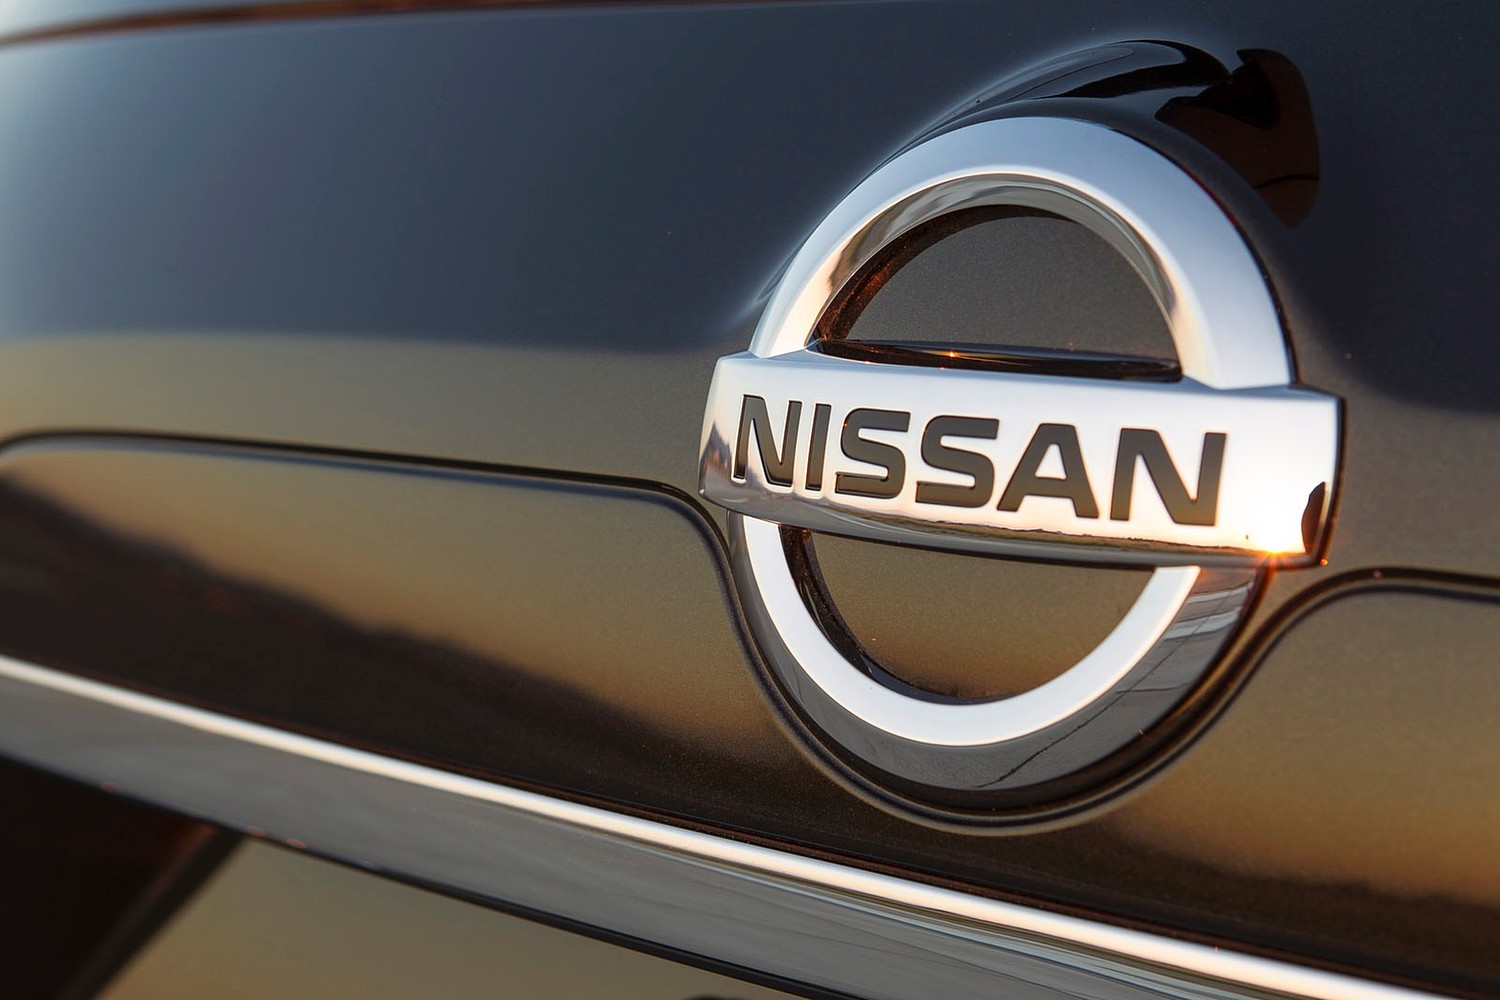 Nissan Rogue SL 4dr SUV Rear Badge (2014 model year shown)